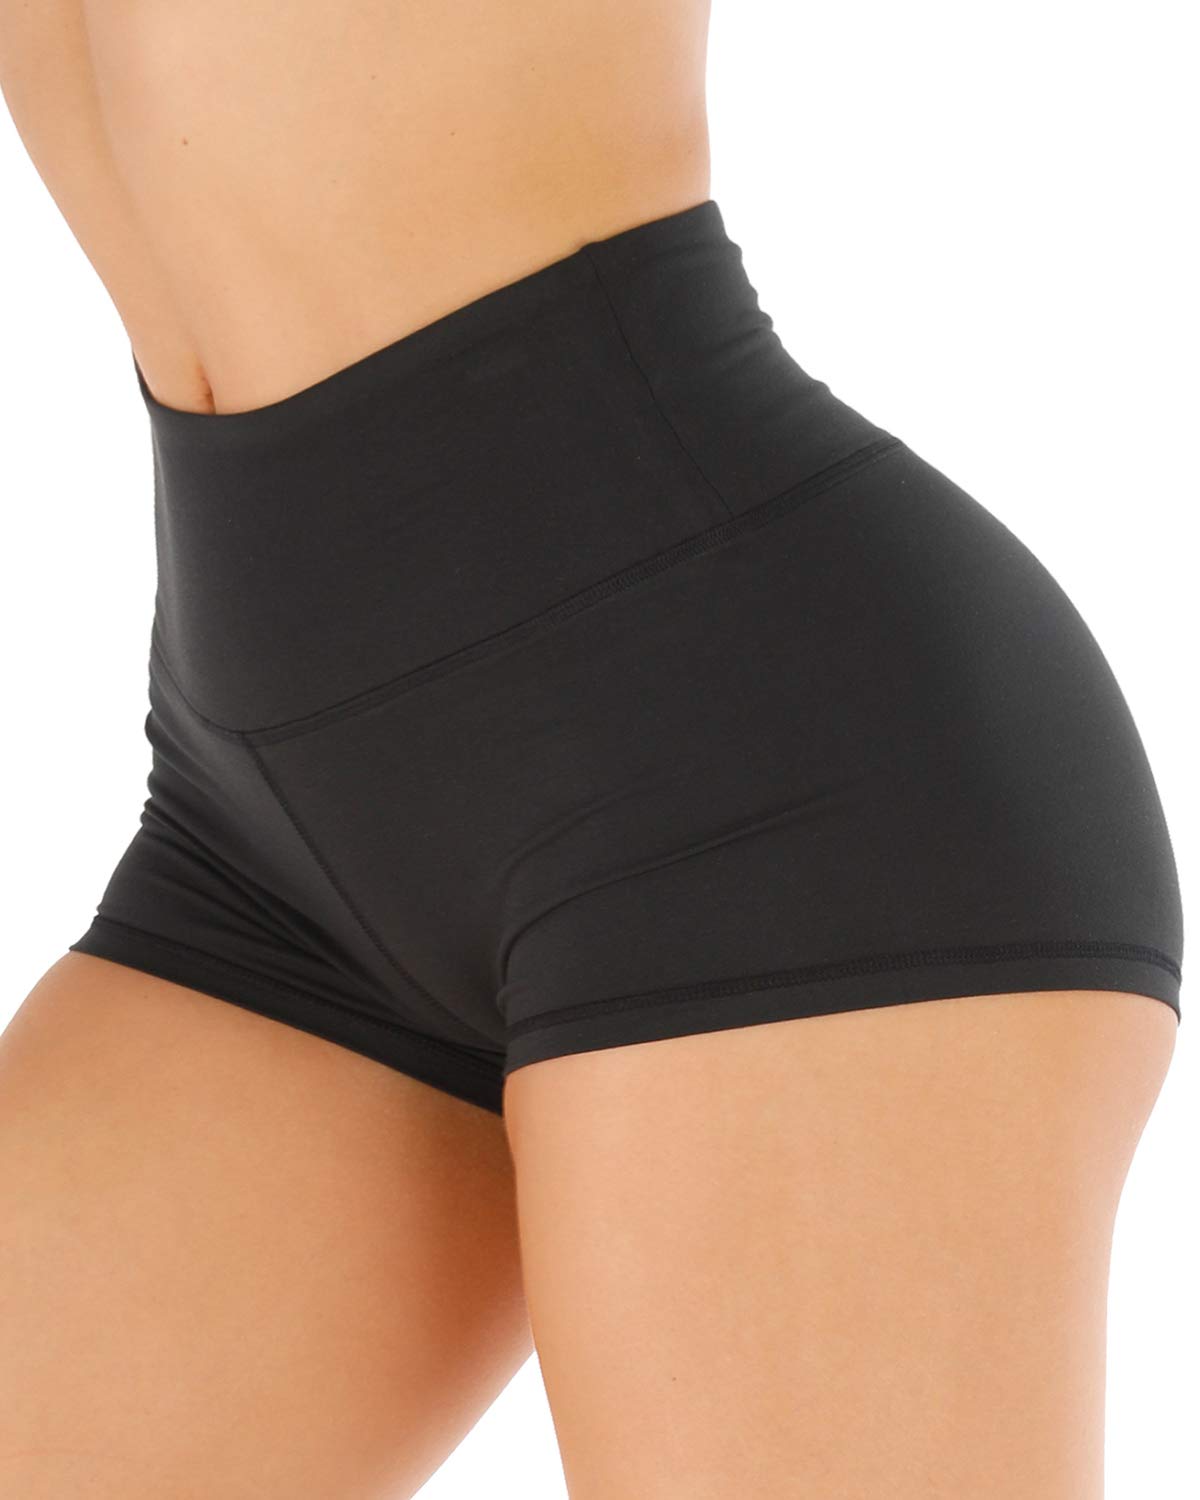 CHRLEISURE Workout Booty Spandex Shorts for Women, High Waist Soft Yoga Shorts